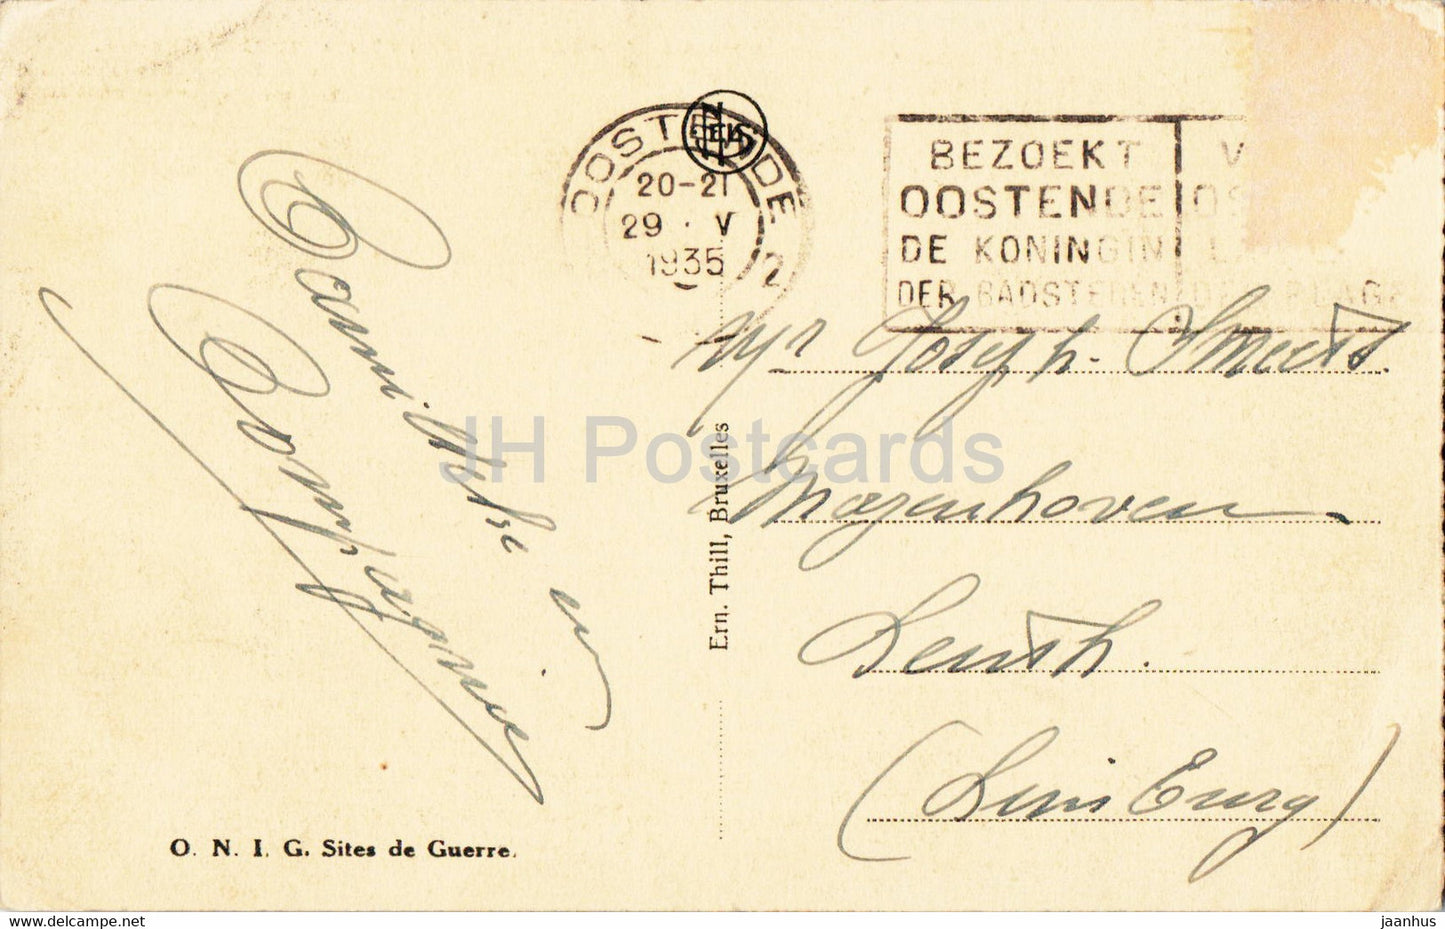 Diksmuide - Boyau de la mort a Dixmude - Ein Droite - Militär - alte Postkarte - 1935 - Belgien - gebraucht